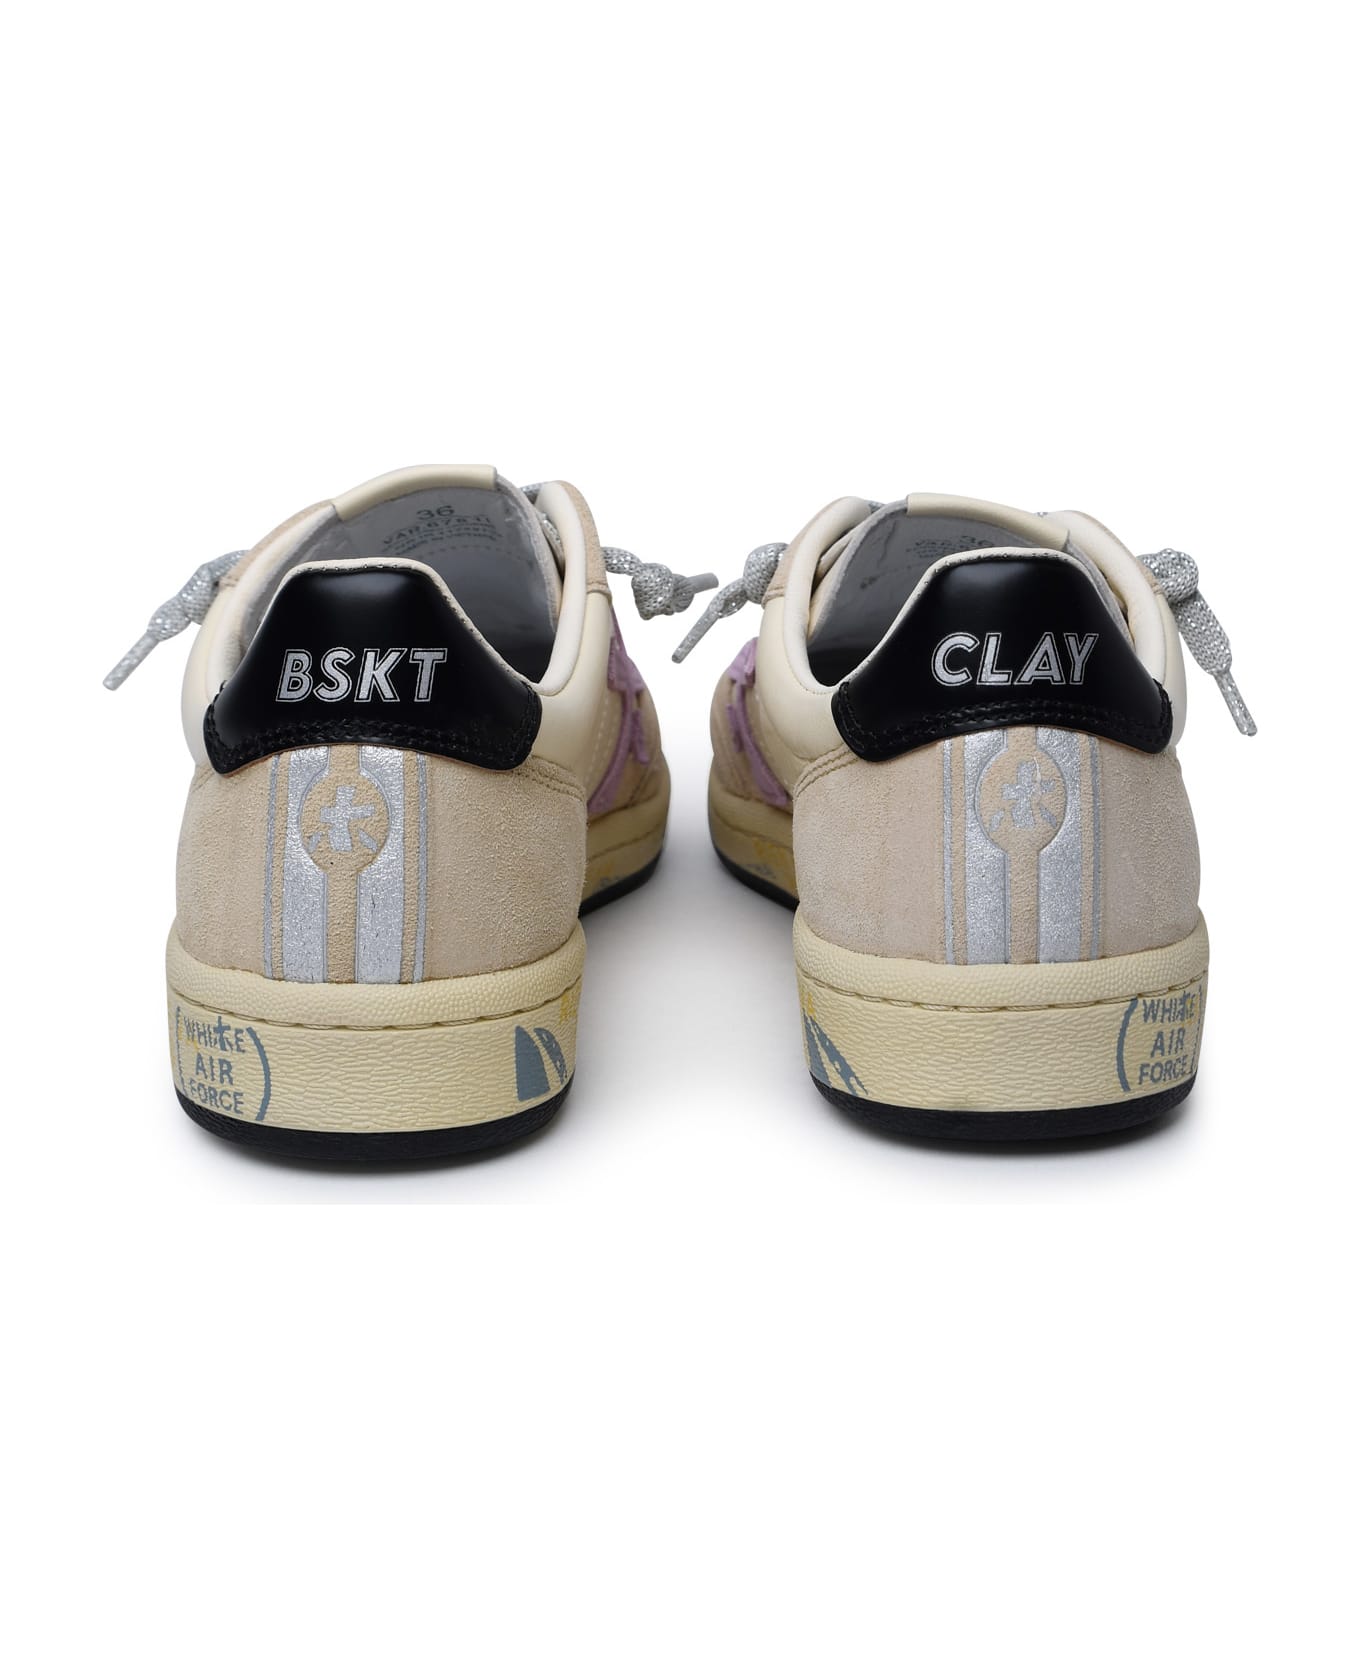 Premiata 'basket Clayd' Beige Leather Sneakers - Beige